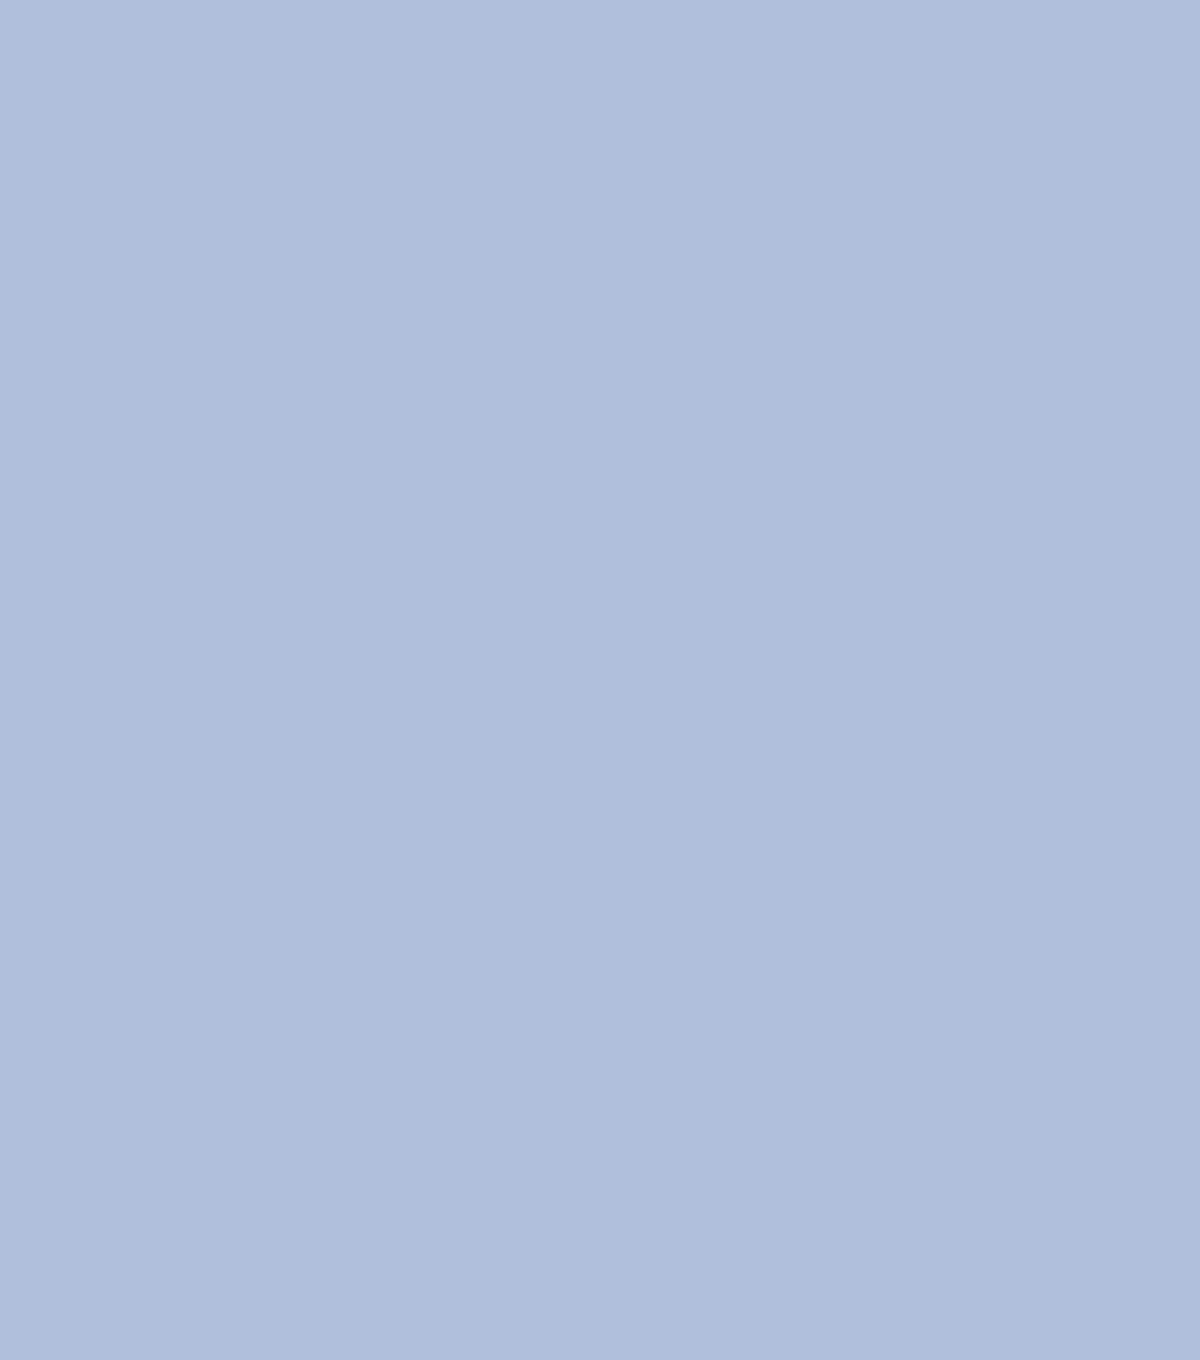 FLIPZONE 3048 cm Light Blue Plain matt Waterproof Wallpaper 3048 x 4572  cm Self Adhesive Sticker Price in India  Buy FLIPZONE 3048 cm Light Blue  Plain matt Waterproof Wallpaper 3048 x